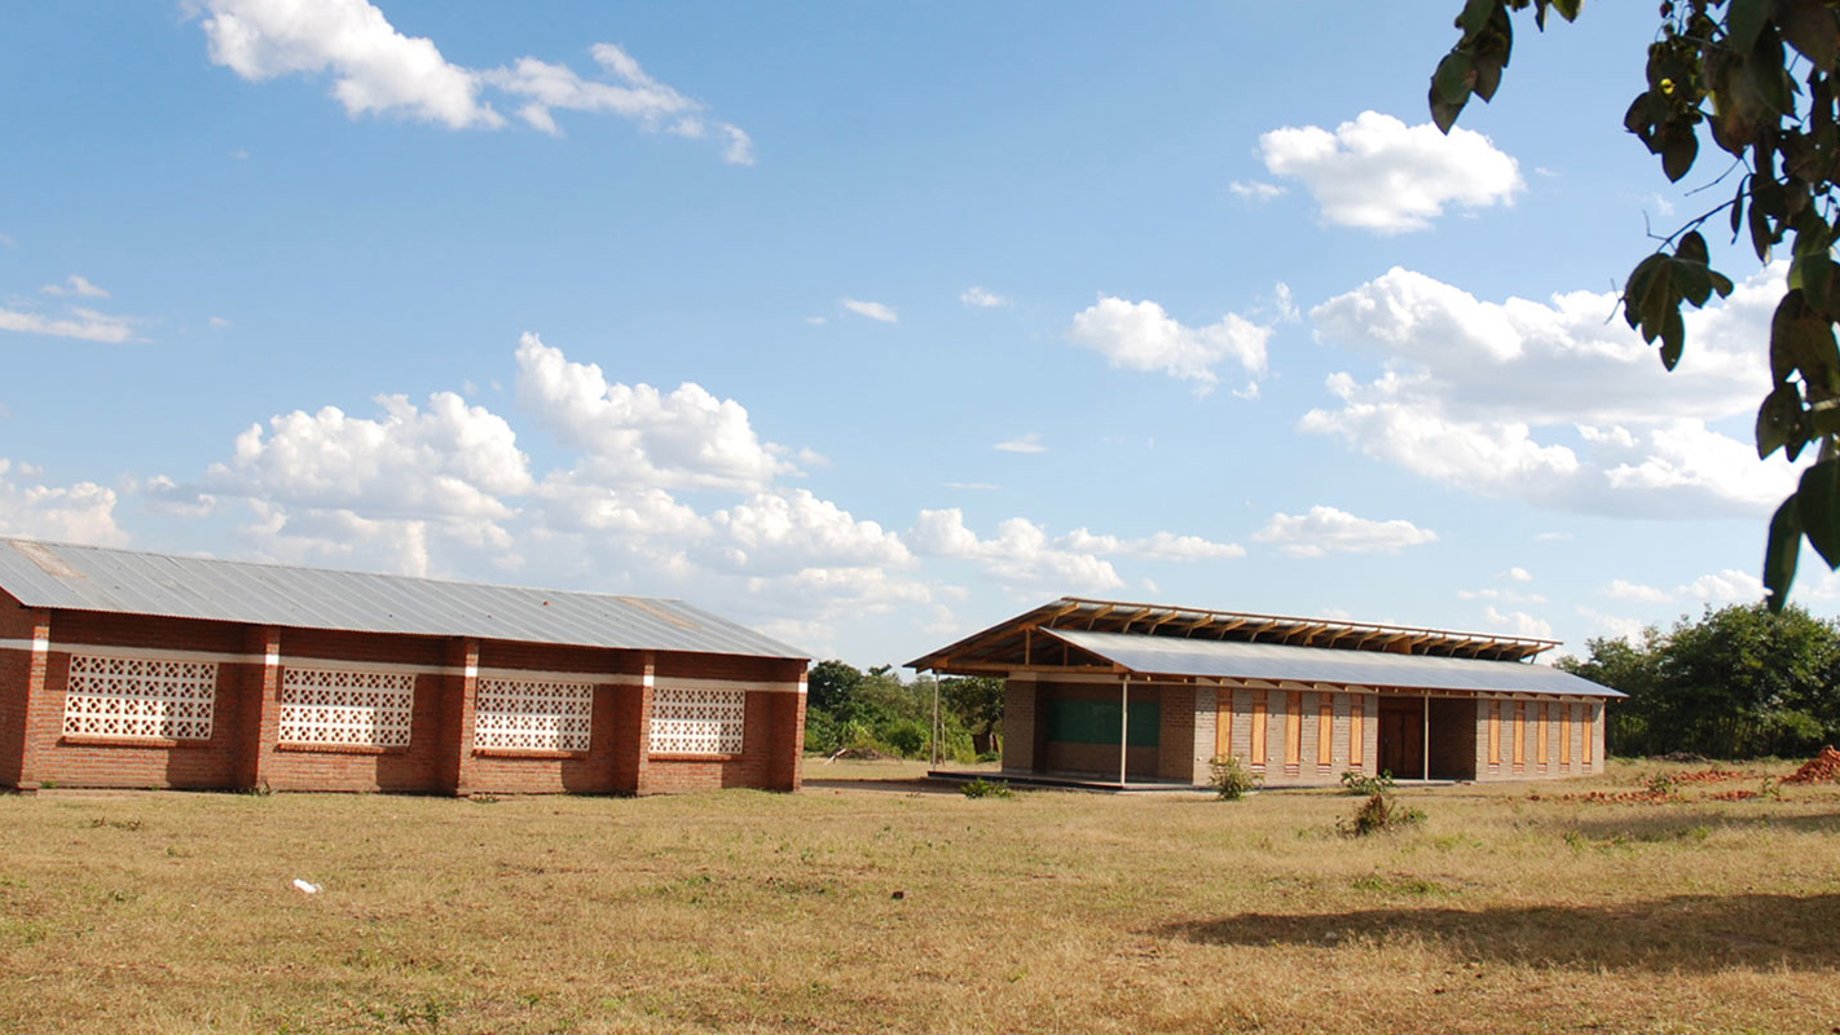 Malawi school design exterior